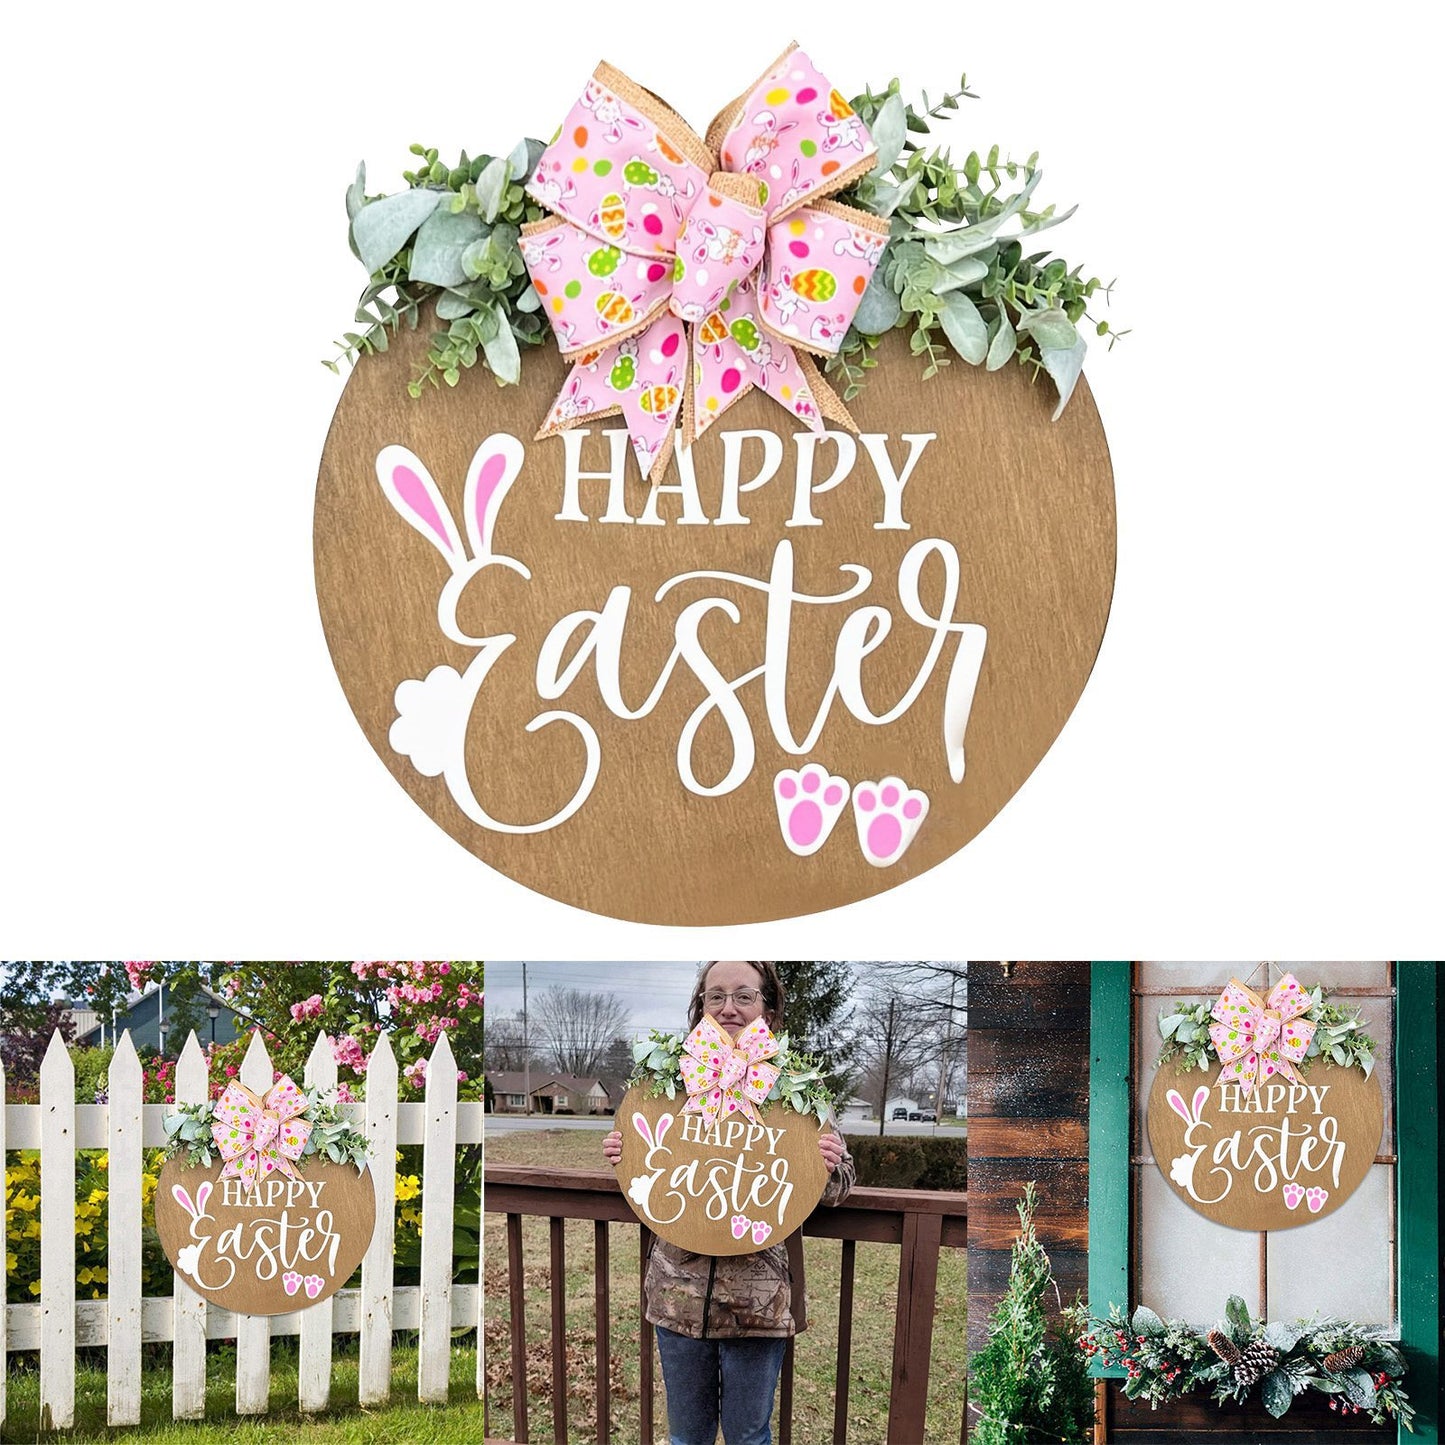  Happy Easter Pine Wood Doorplate 